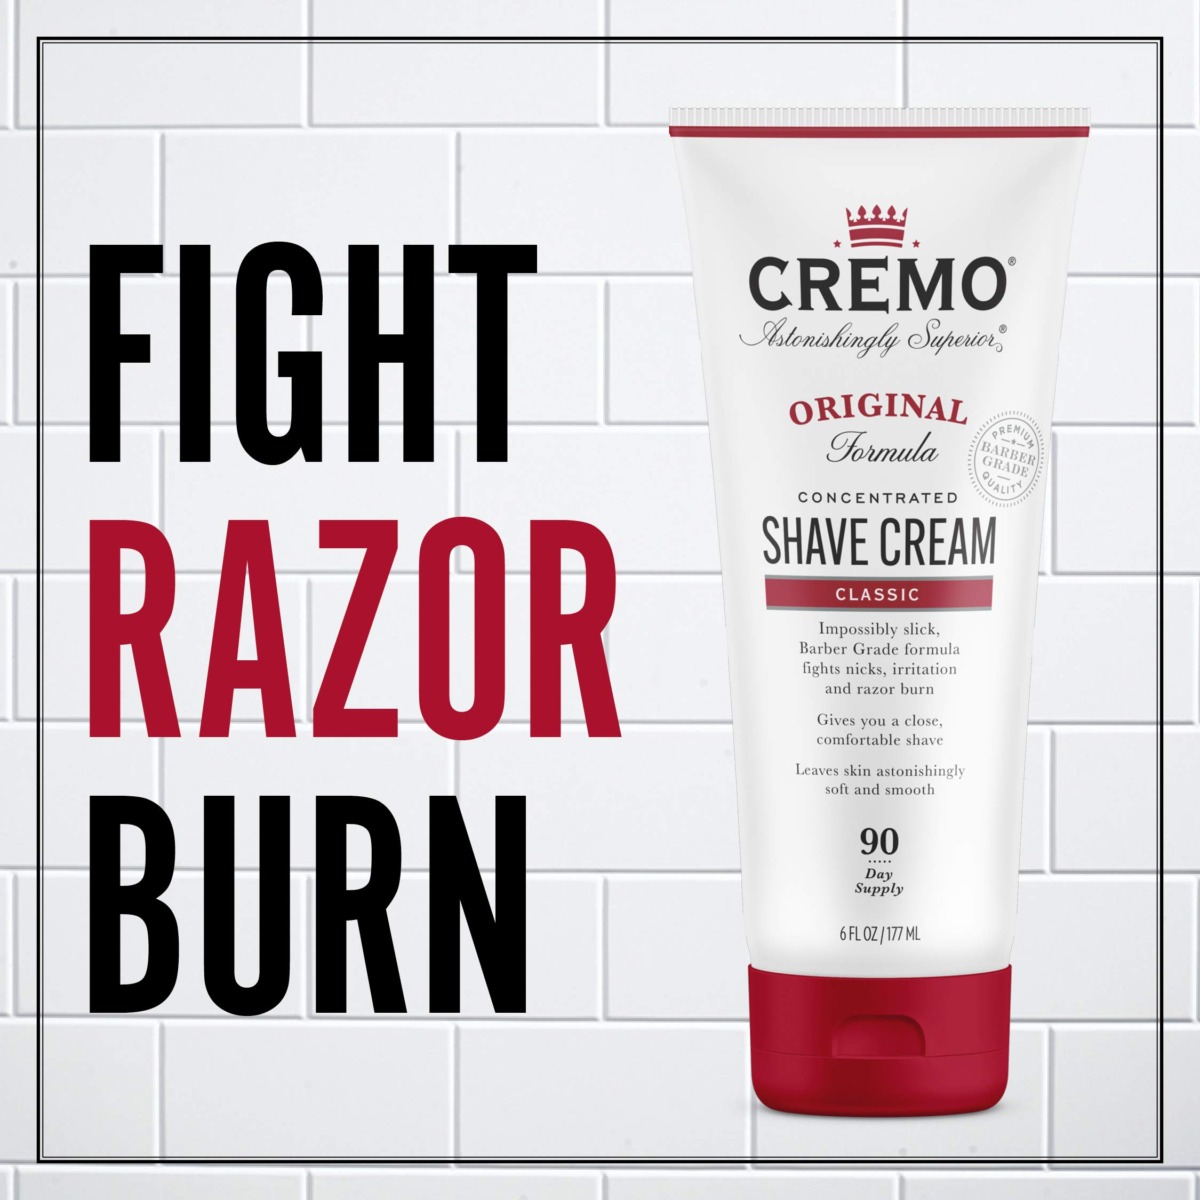 Cremo Barber Grade Original Shave Cream, Astonishingly Superior Ultra-Slick Shaving Cream Fights Nicks, Cuts and Razor Burn, 6 Fl Oz | The Storepaperoomates Retail Market - Fast Affordable Shopping